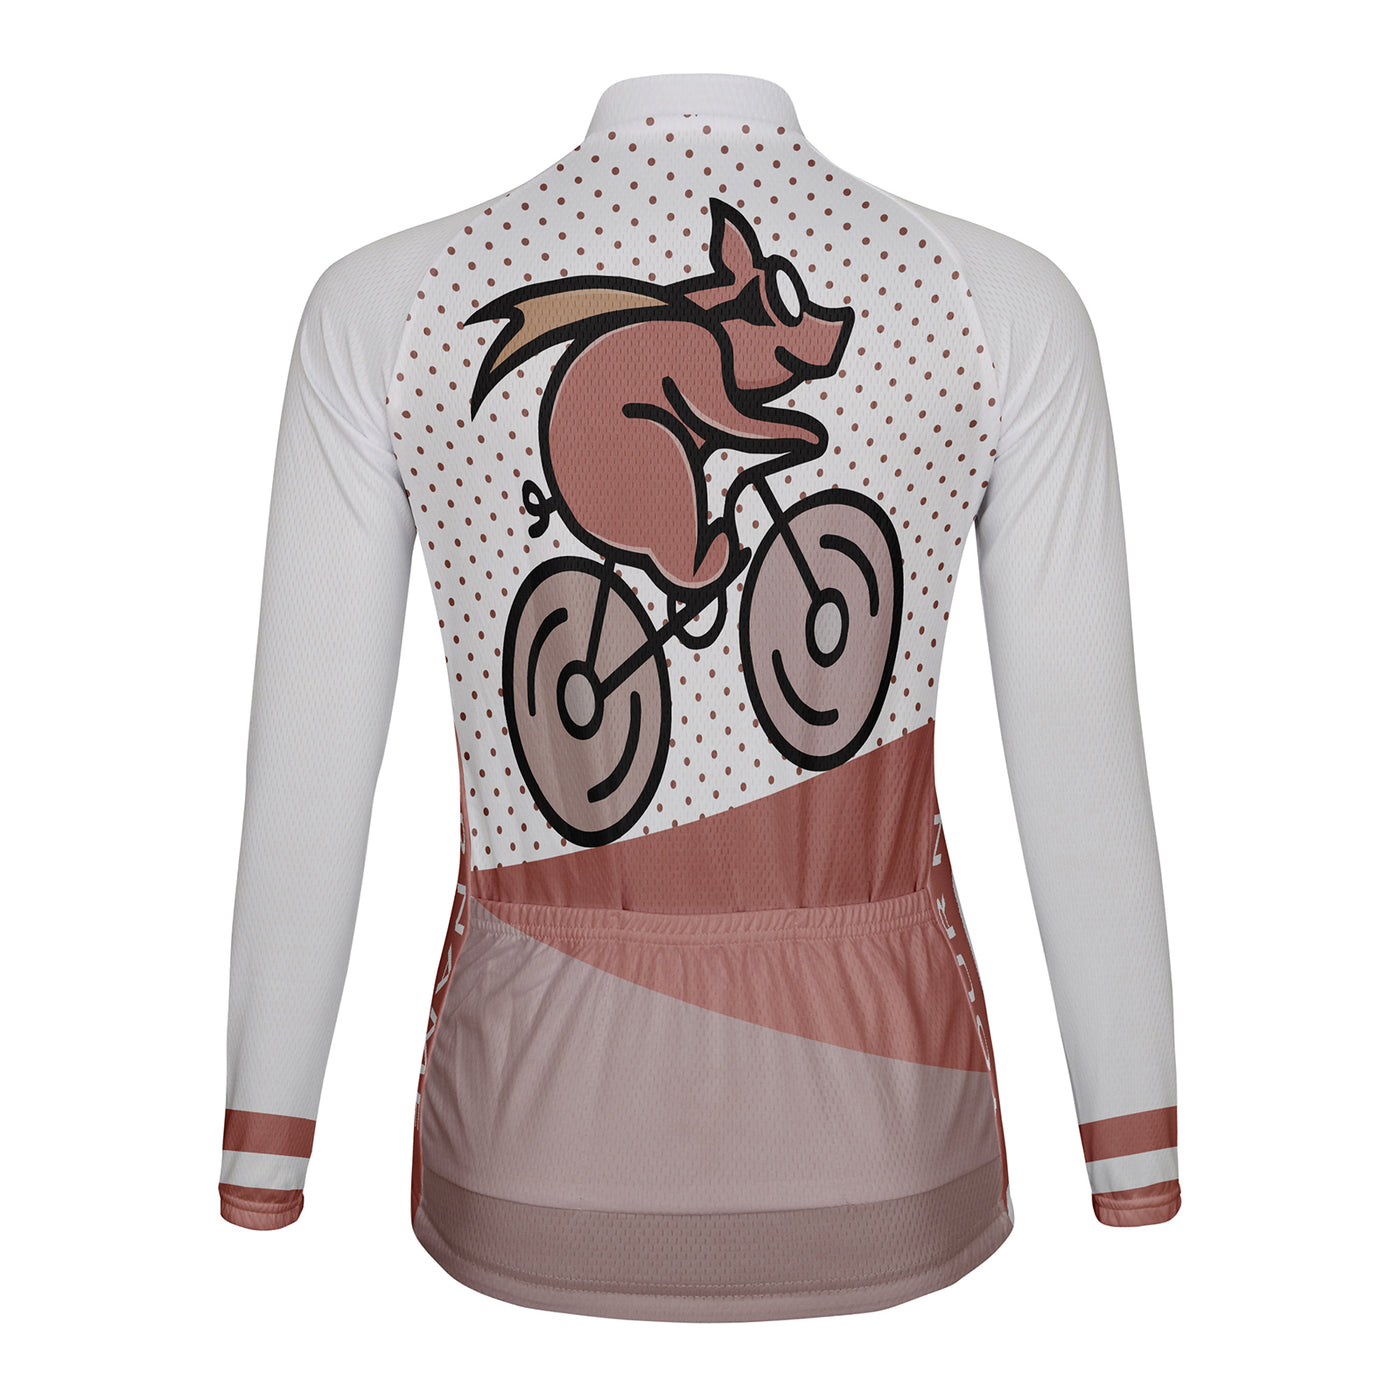 Customized Pig Women's Cycling Jersey Long Sleeve